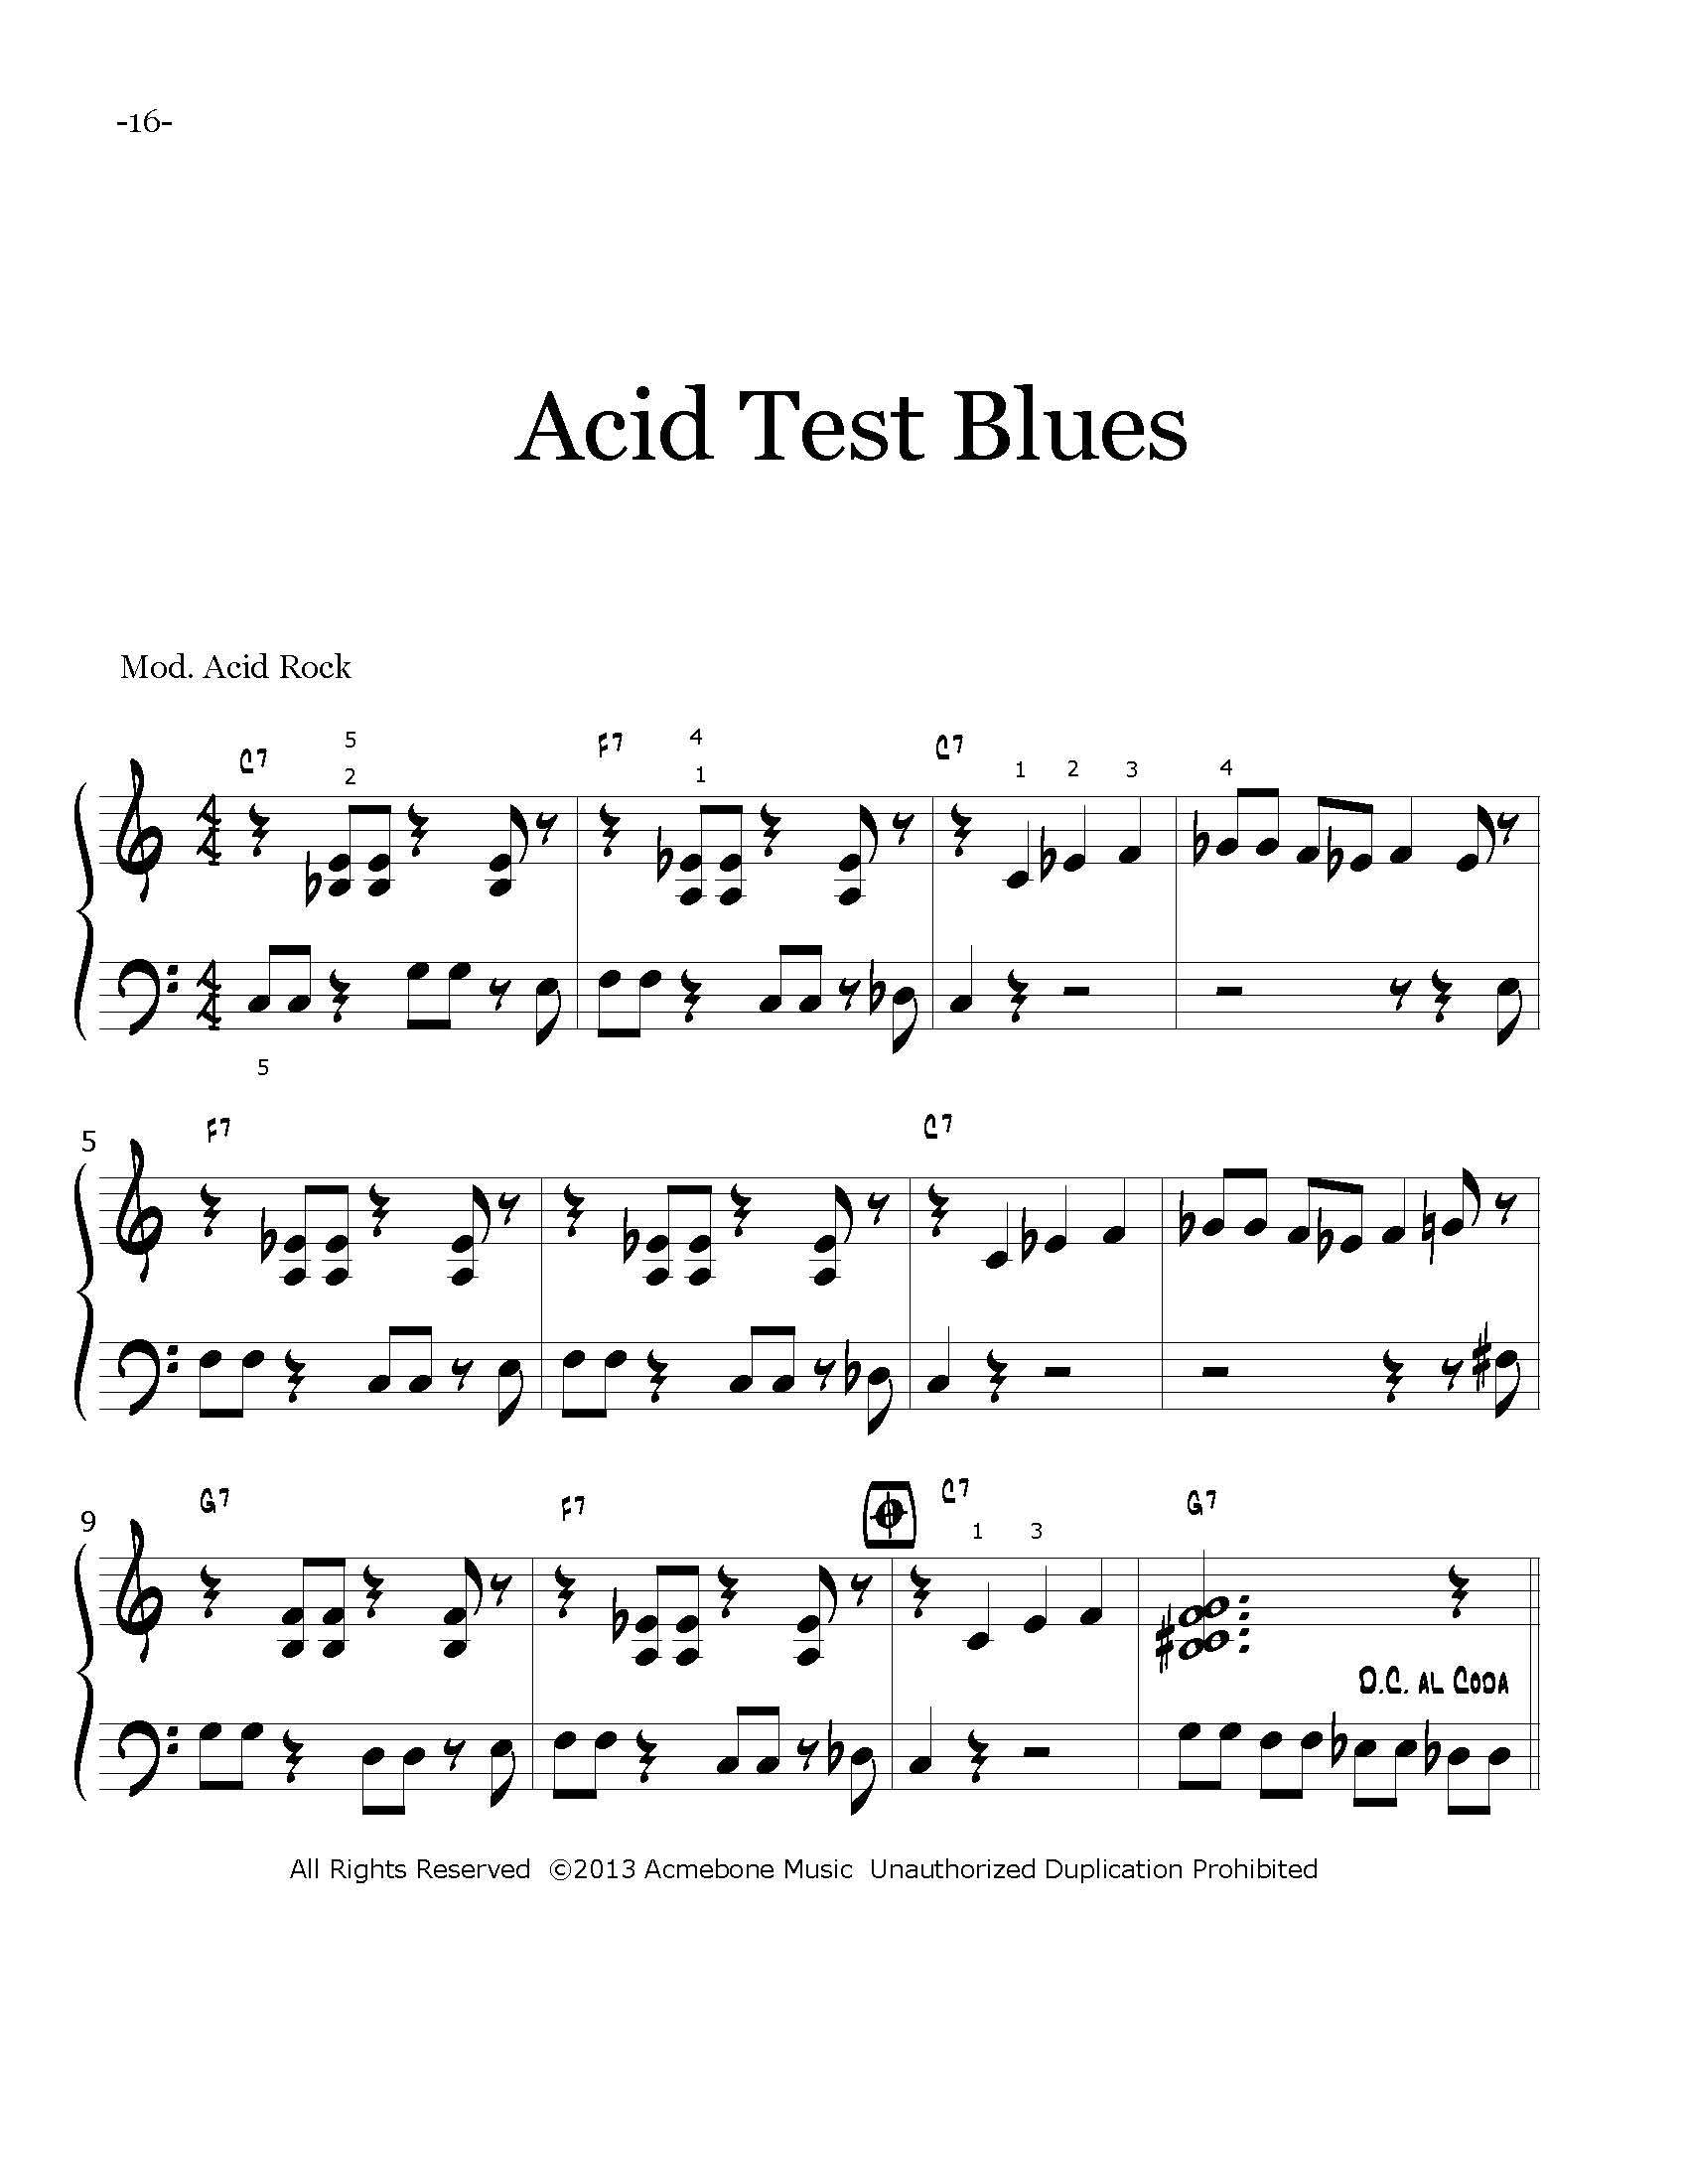 Progressive Jazz Etudes for Piano bk1 for web_Page_17.jpg